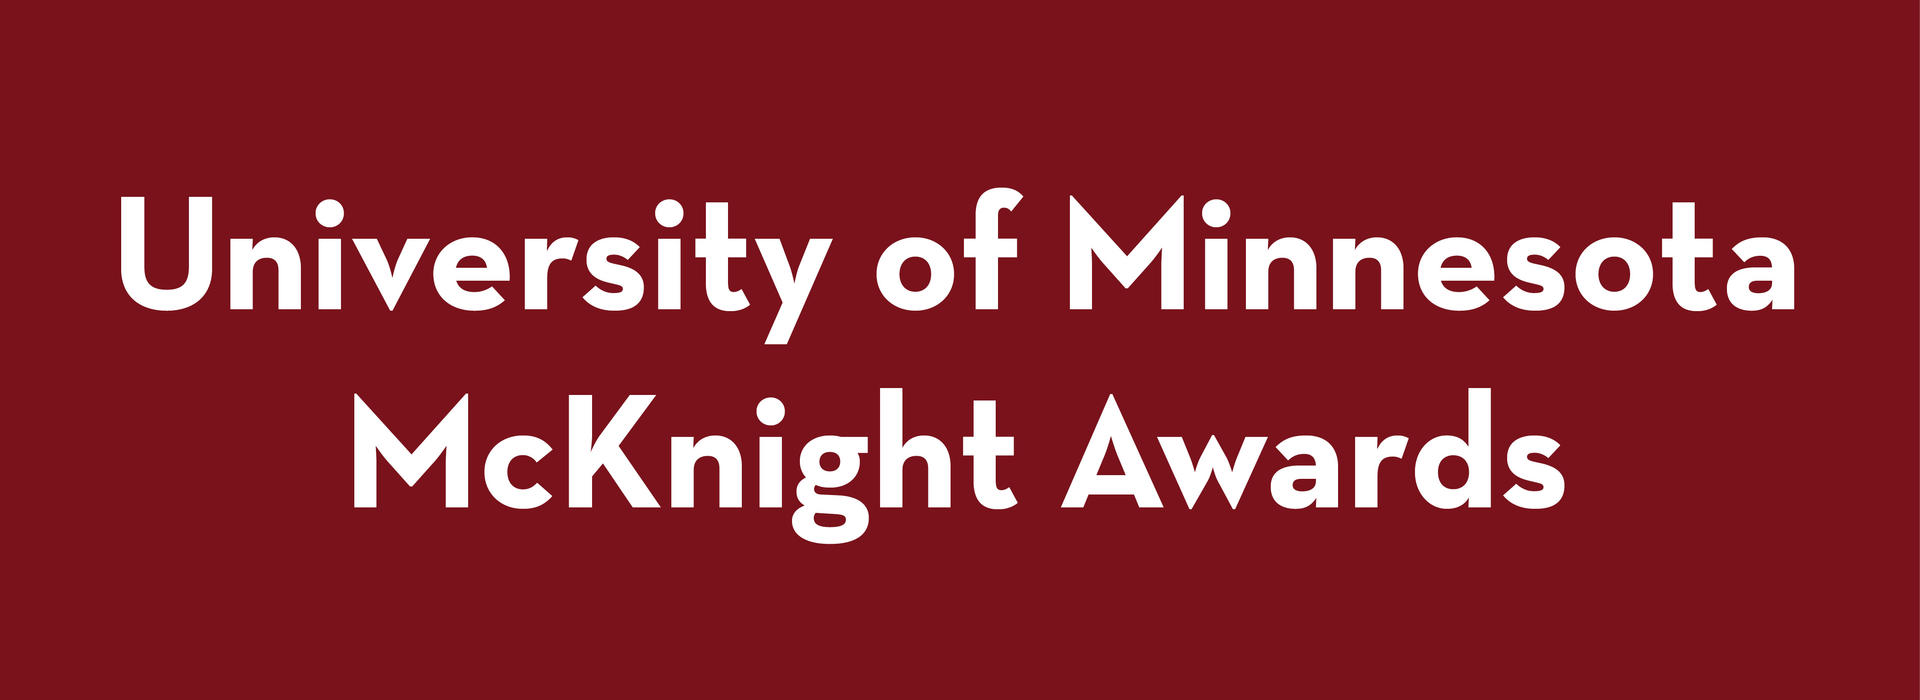 University of Minnesota McKnight Awards